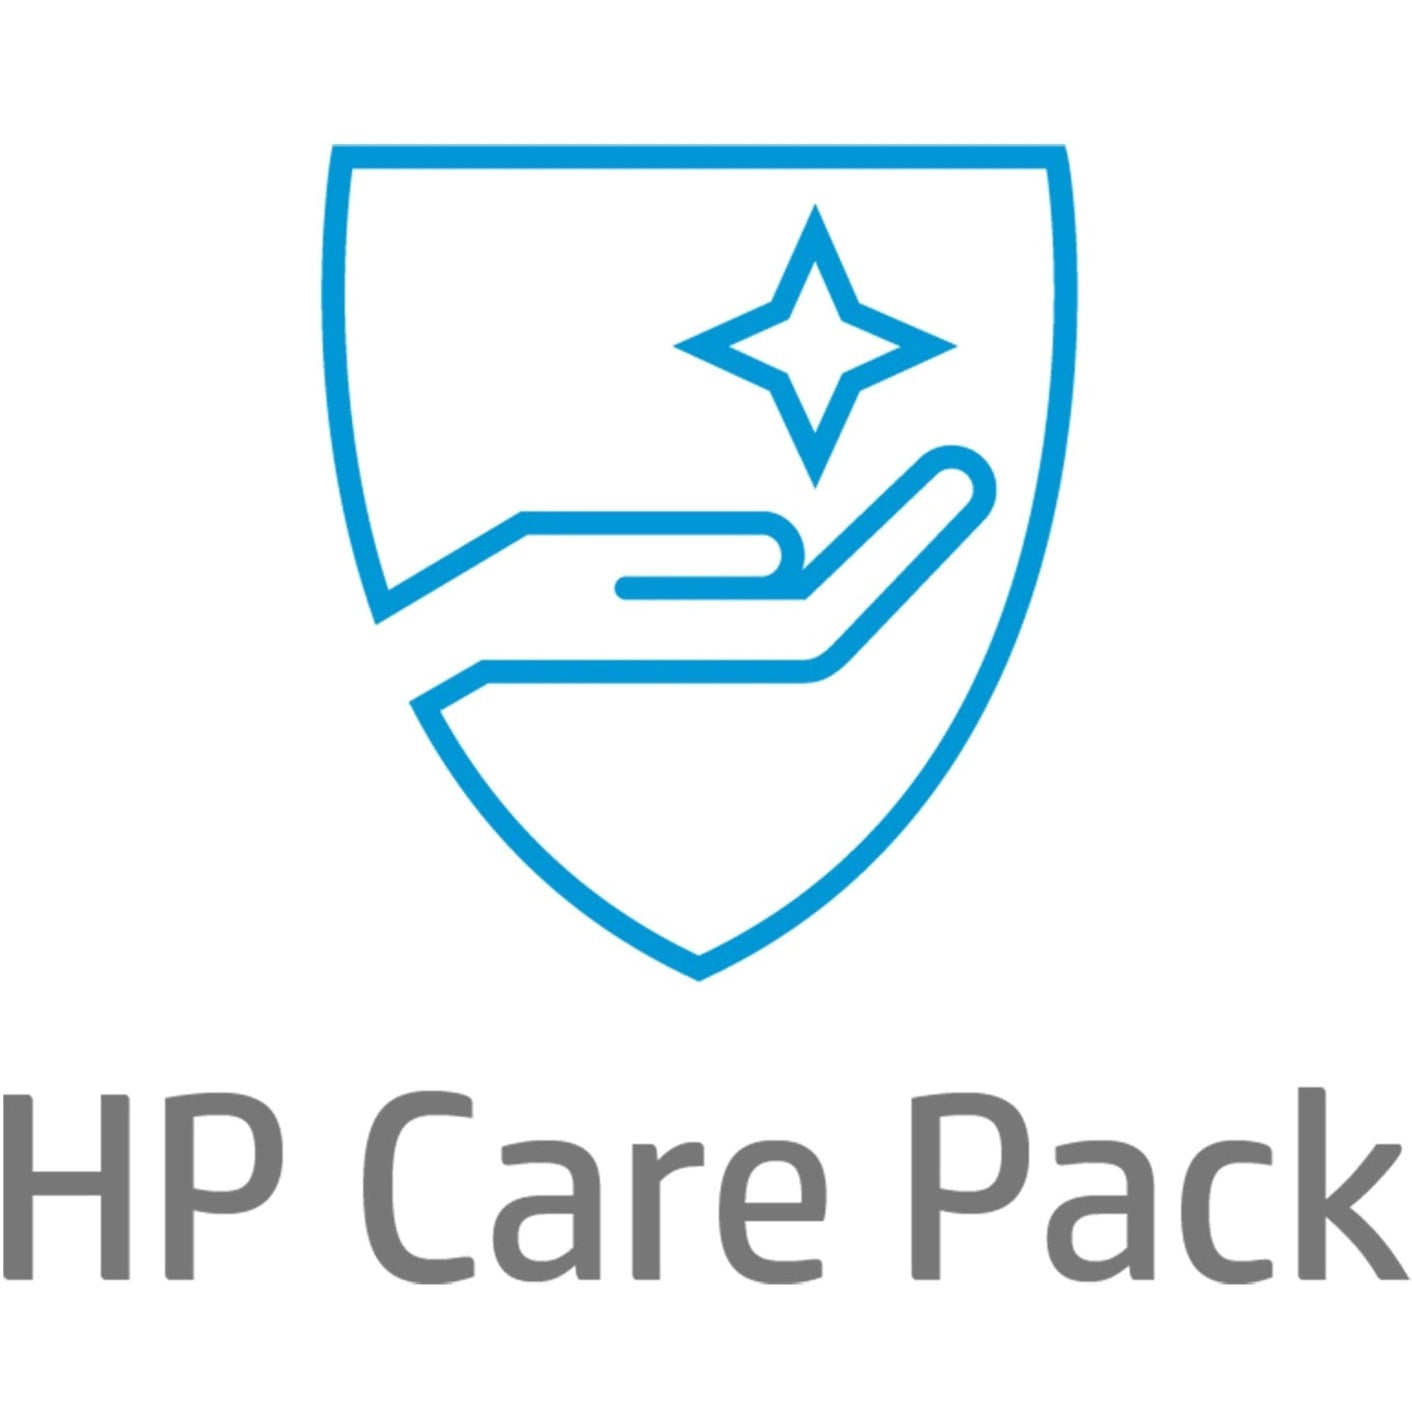 HP Care Pack - 3 Year - Warranty (U9WV8E)